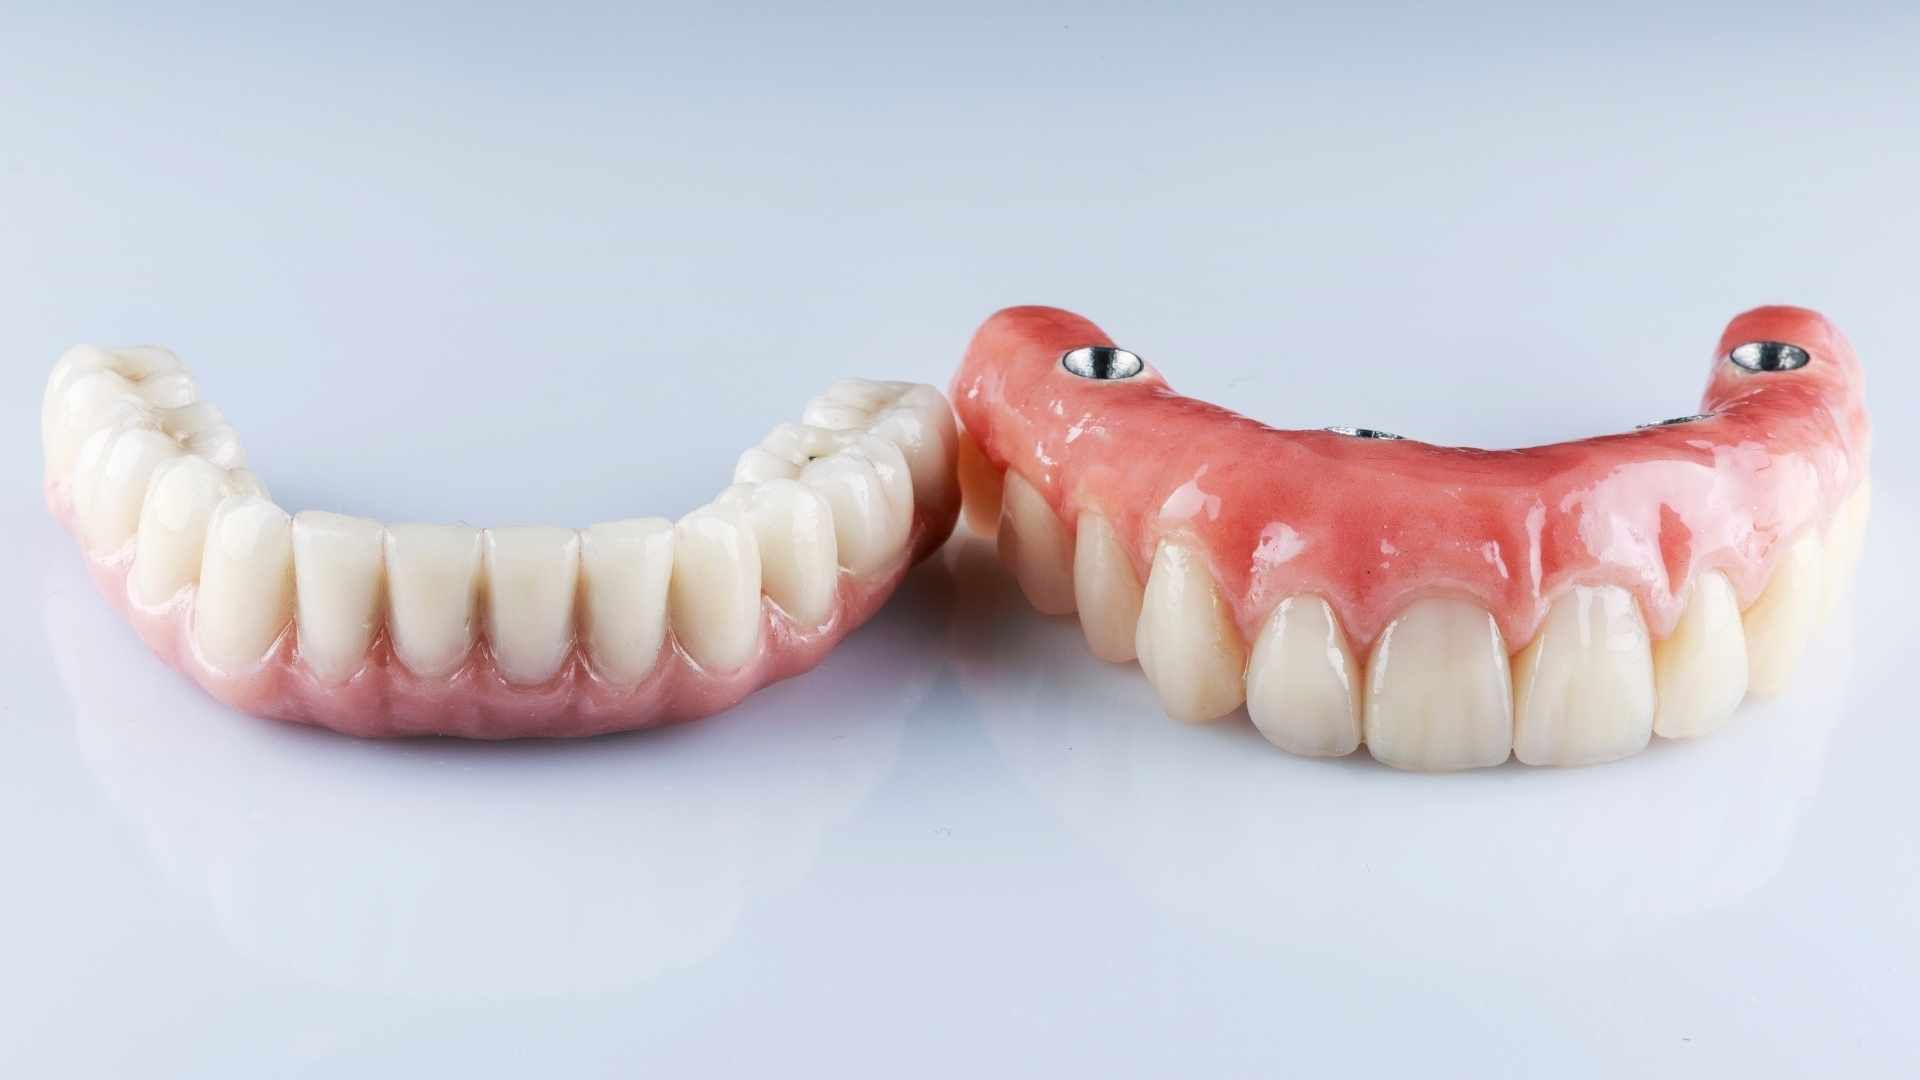 دندان پروتز متحرک (دندان مصنوعی کامل) یک فک